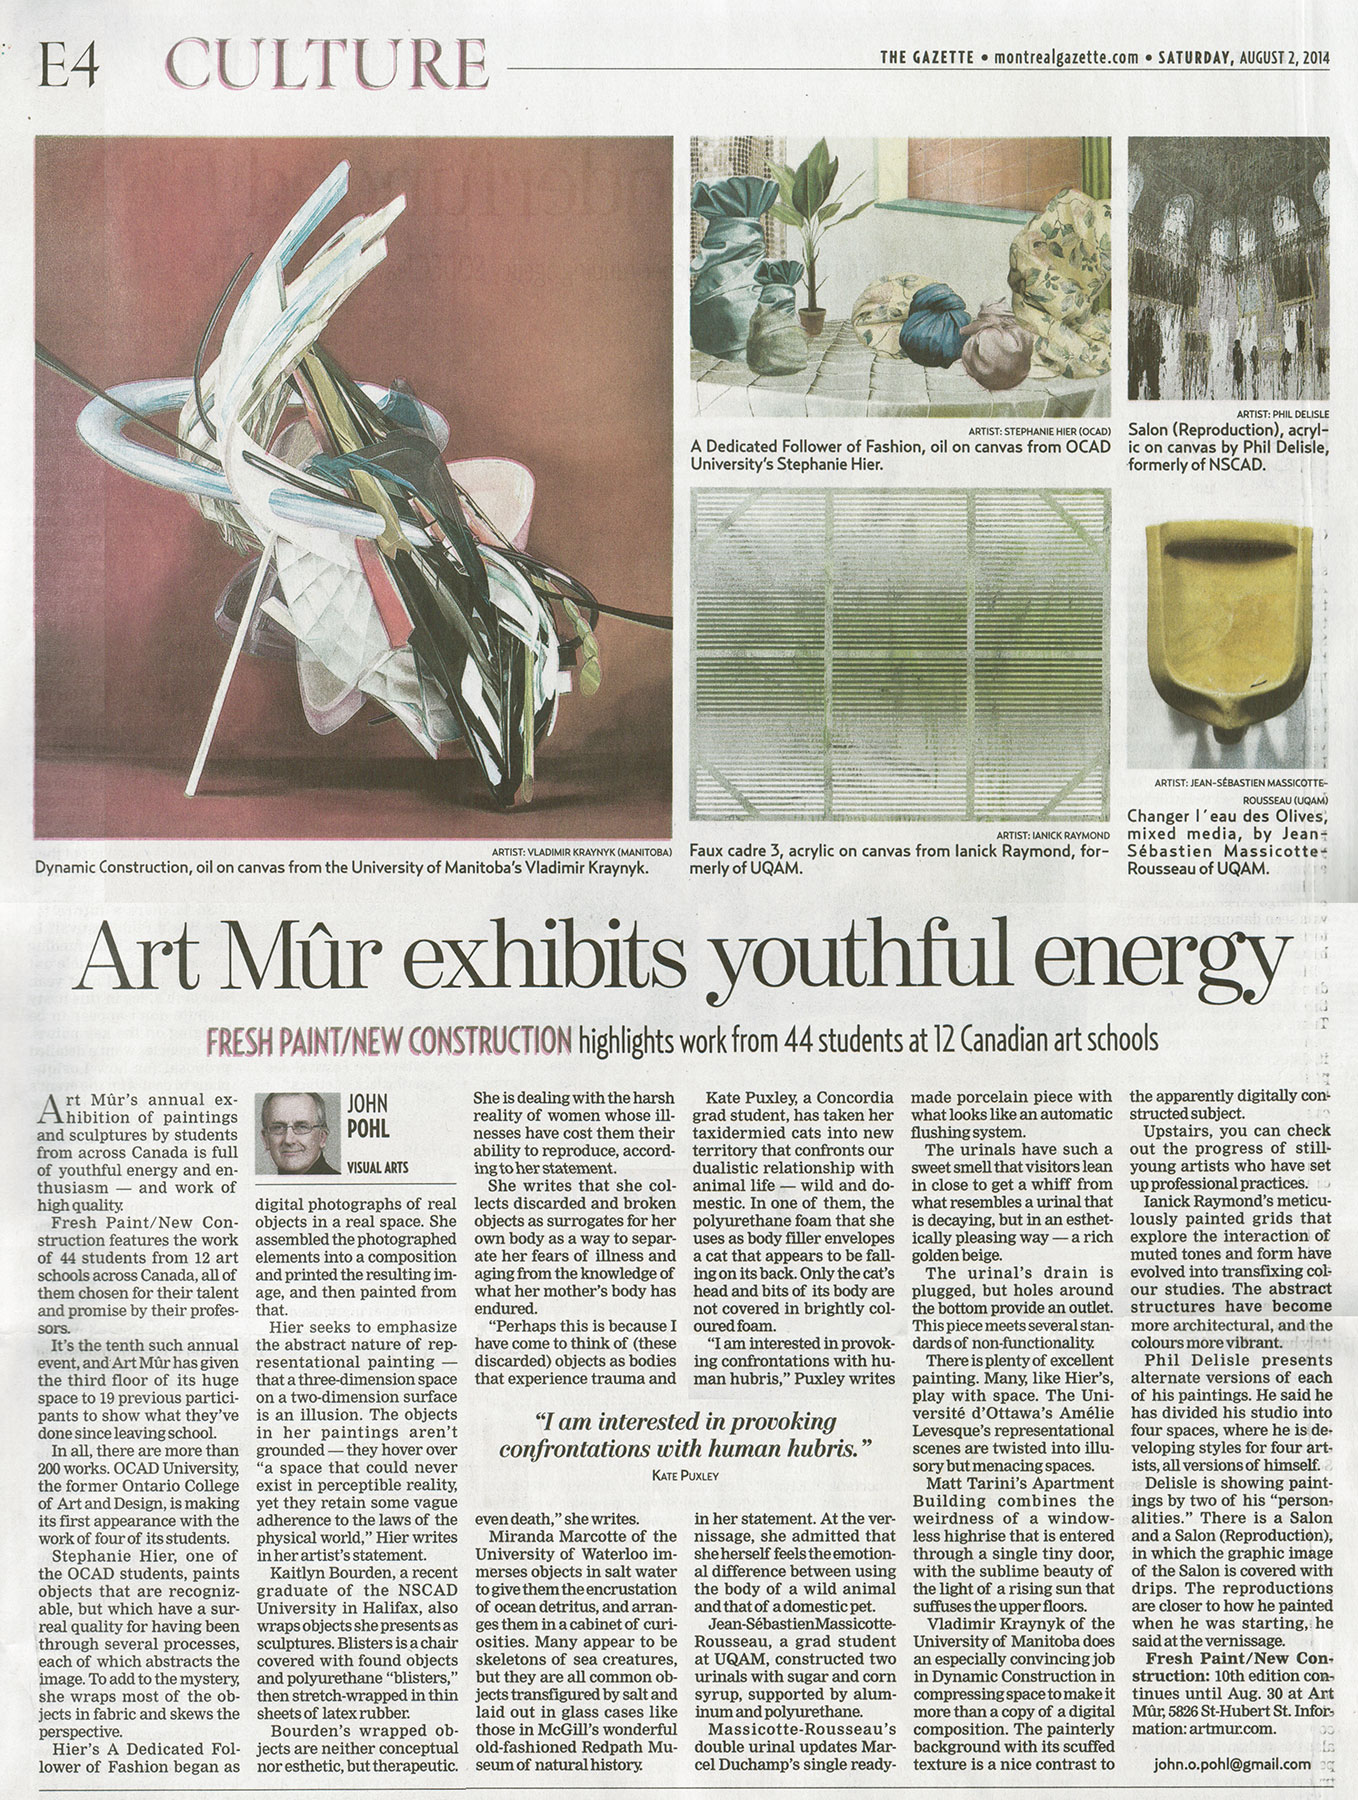   Visual Arts: Art Mûr exhibits youthful&nbsp;energy   Montreal Gazette  Saturday, August 2, 2014. 